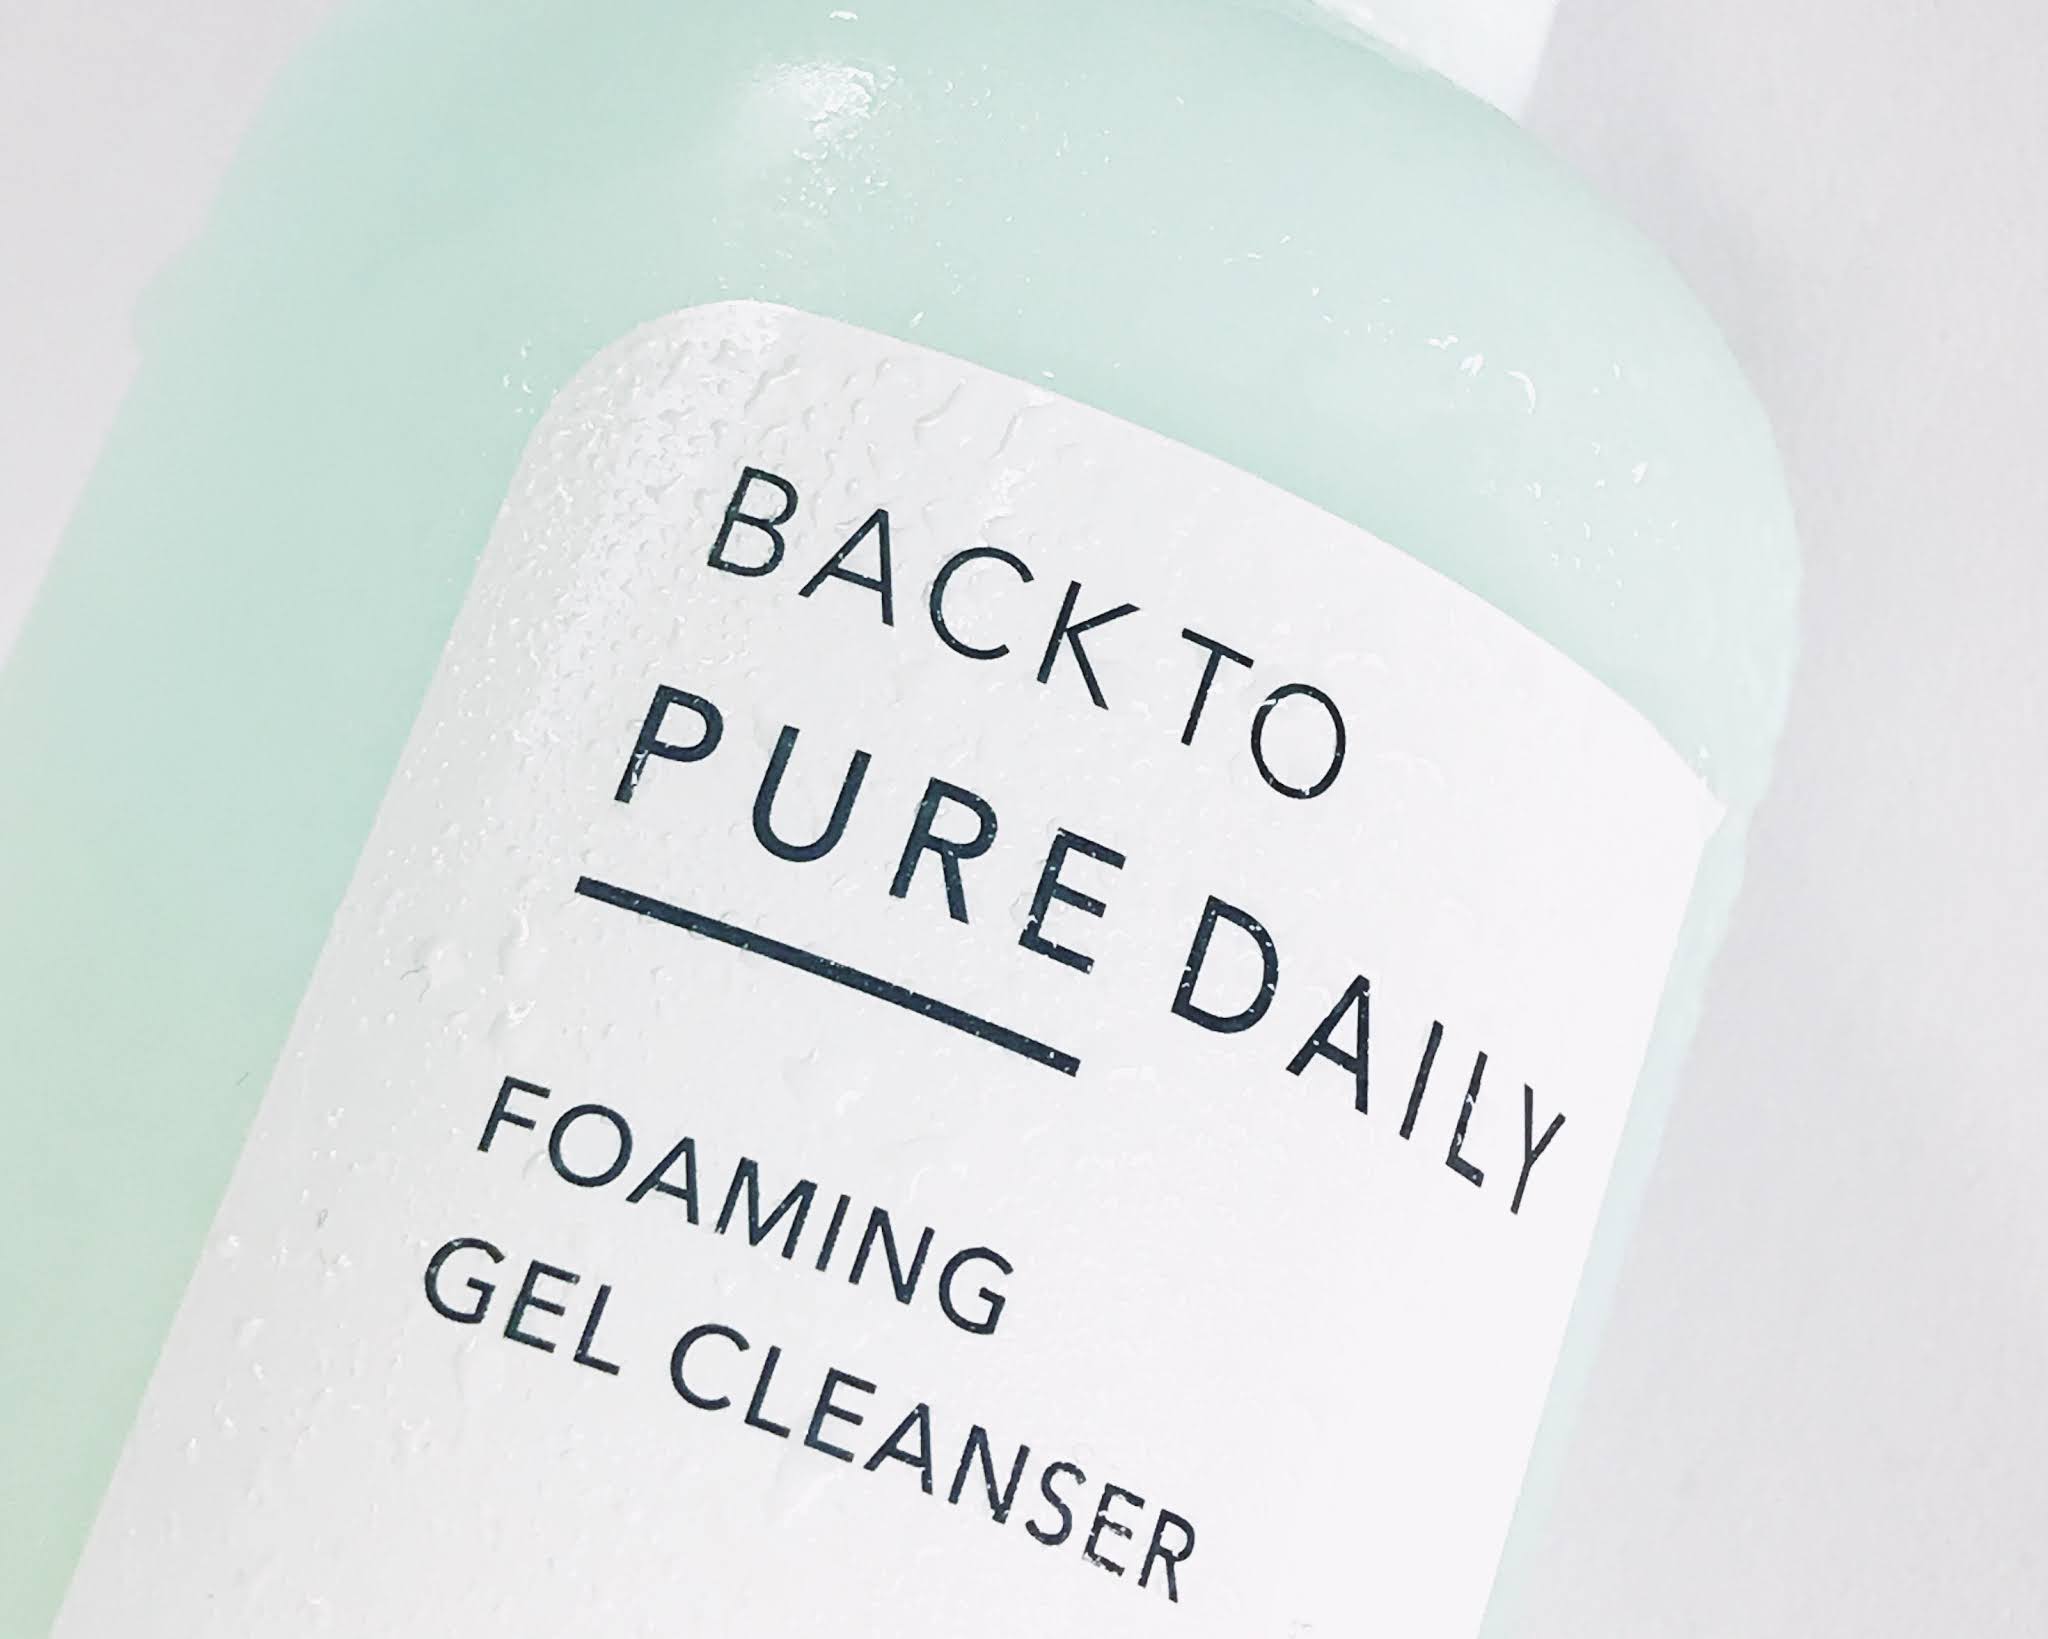 Back to Pure Daily Foaming Gel Cleanser. Thank you Farmer пилинг скатка. Soskin Foaming Cleansing Gel. Pure Cleansing Gel. Cleansing gel foam